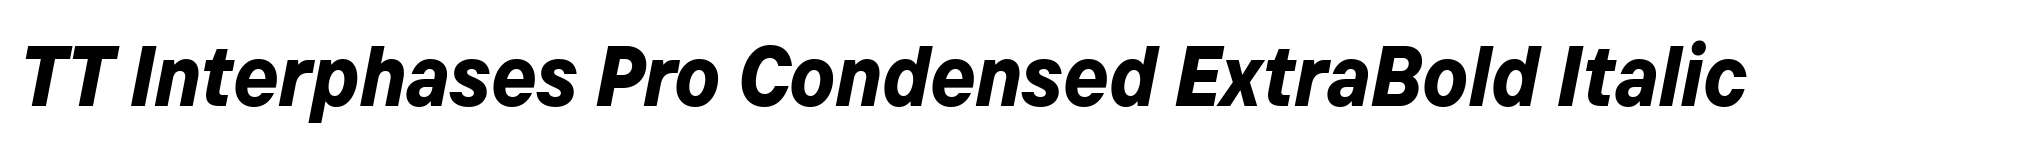 TT Interphases Pro Condensed ExtraBold Italic image